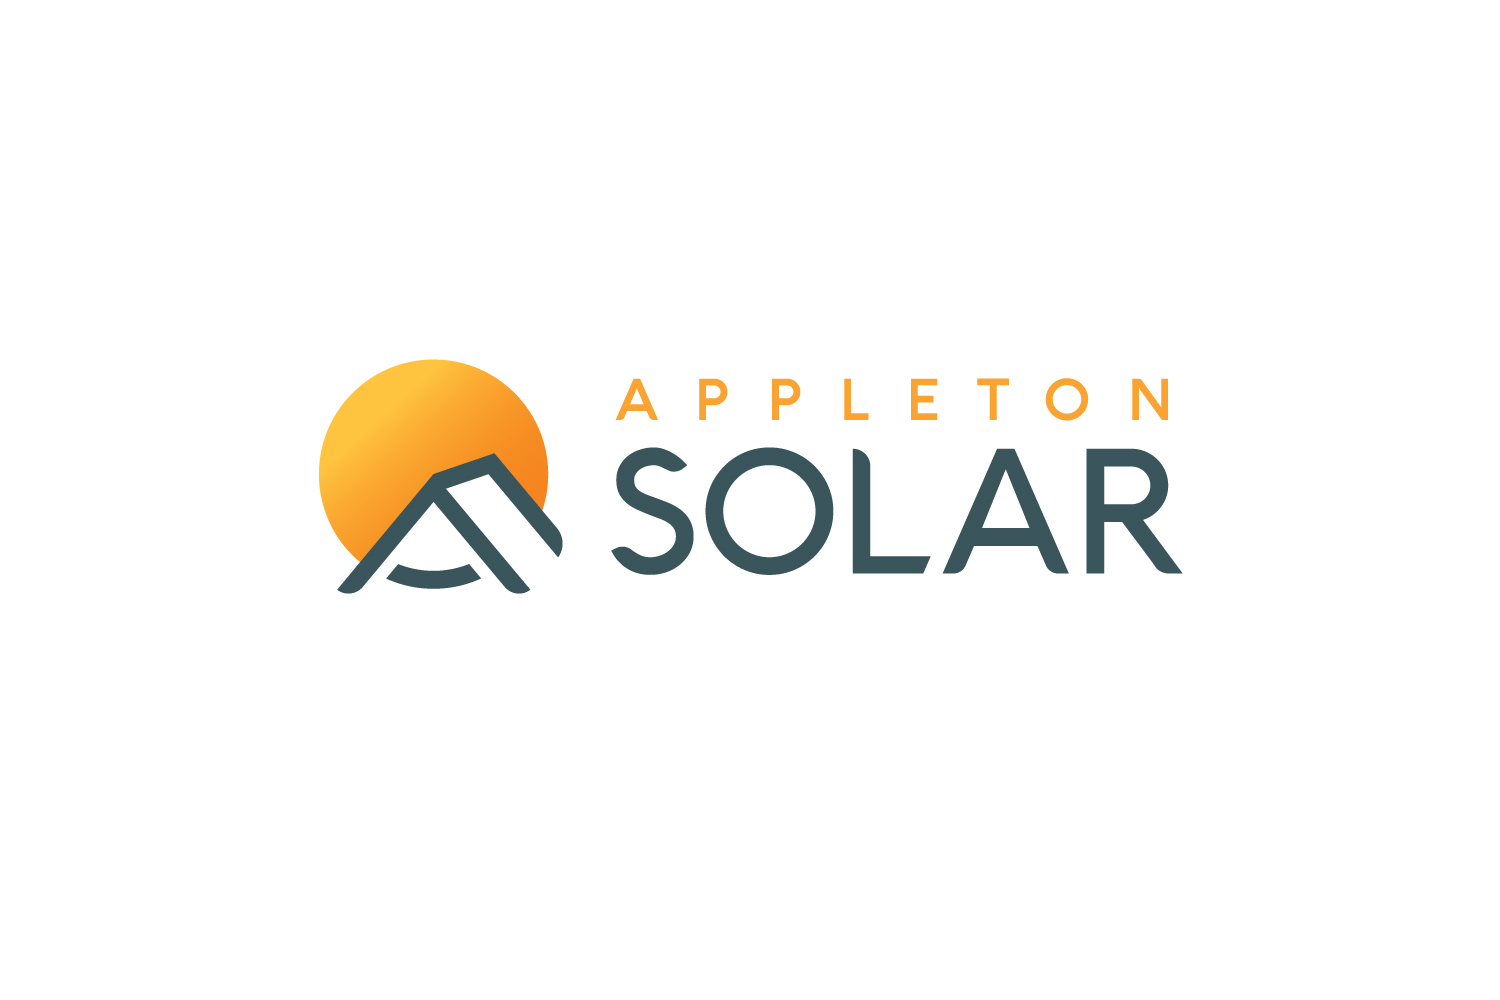 Appleton Solar logo with white background